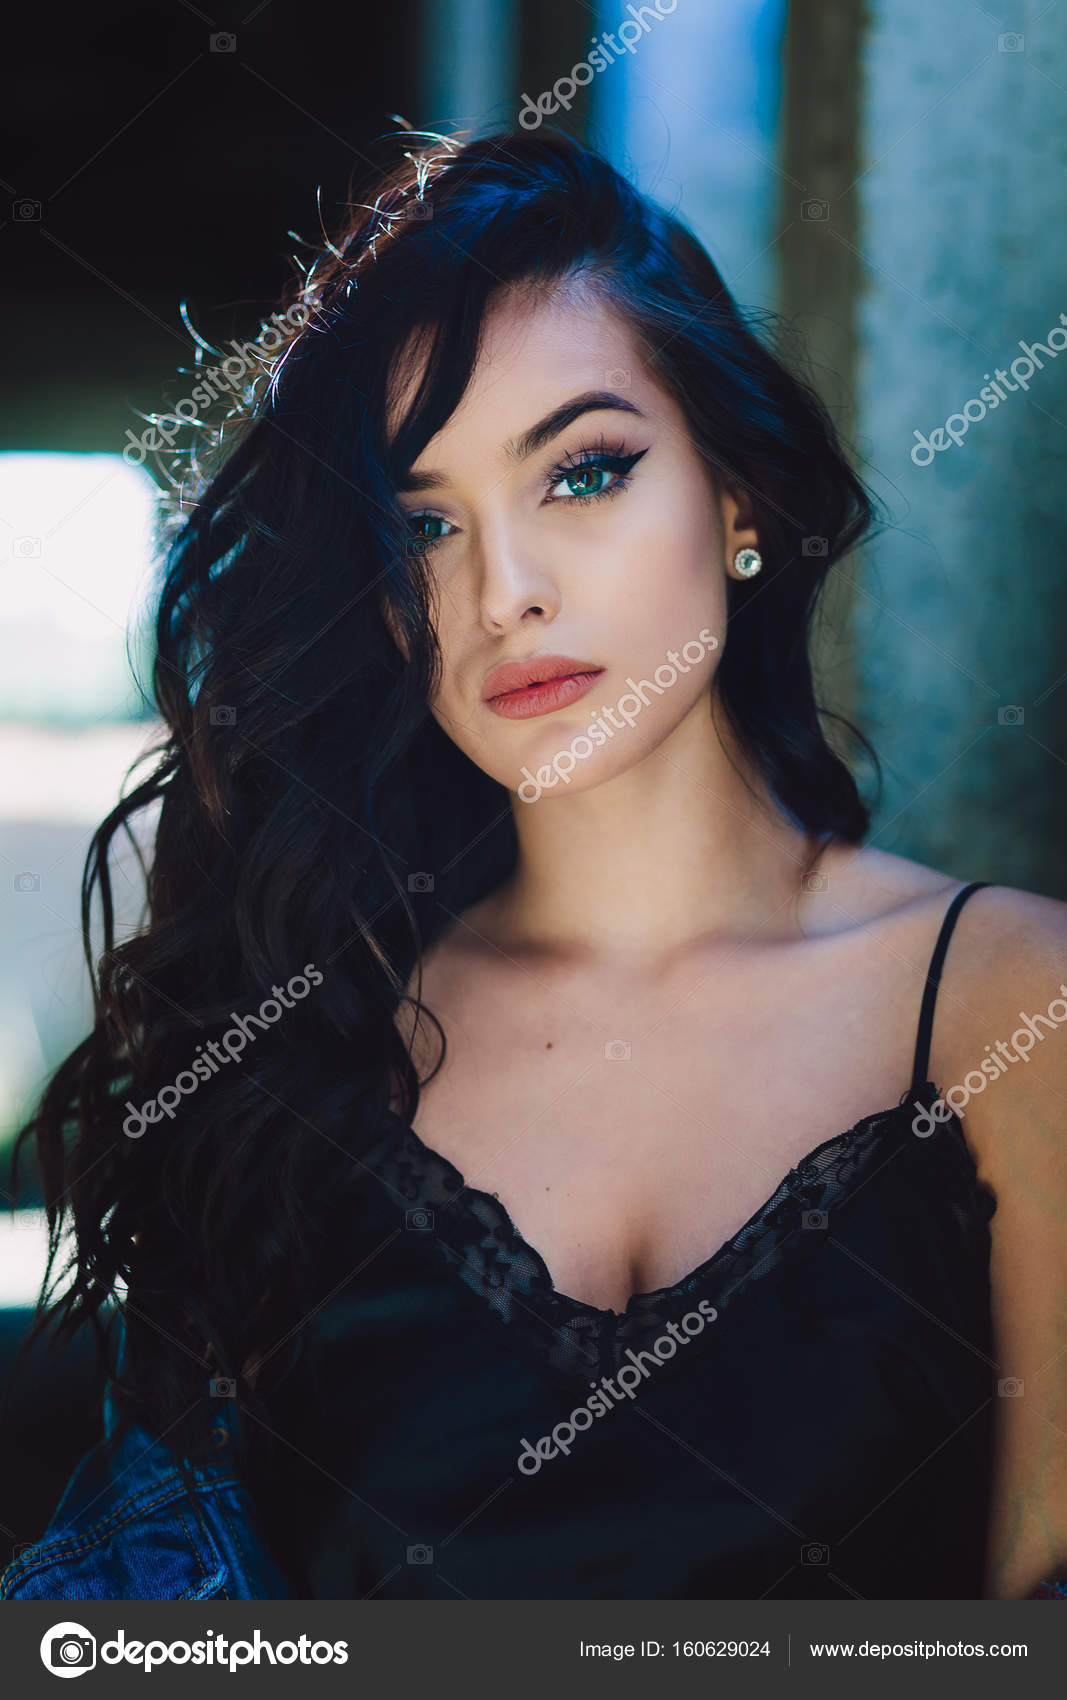 https://st3.depositphotos.com/4294575/16062/i/1600/depositphotos_160629024-stock-photo-young-sensual-brunette-woman.jpg